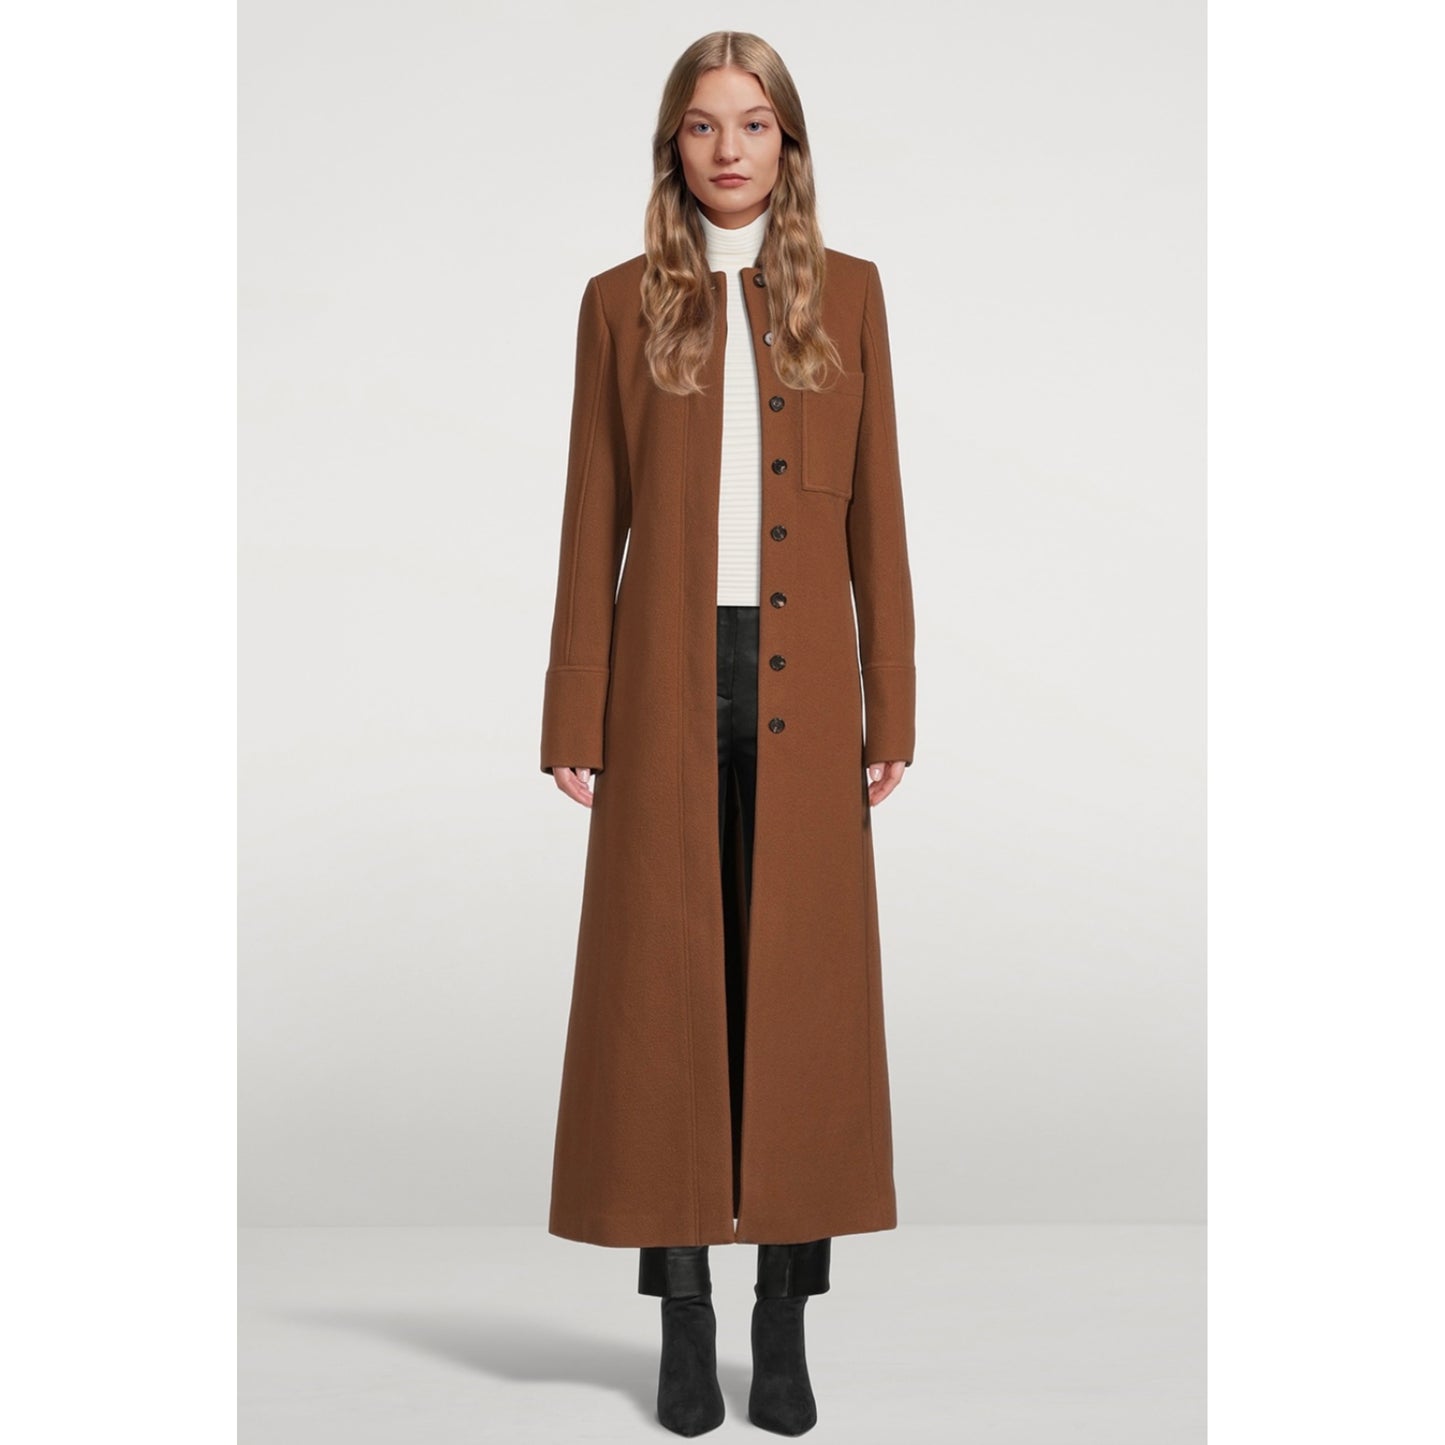 Victoria Beckham Wool Coat